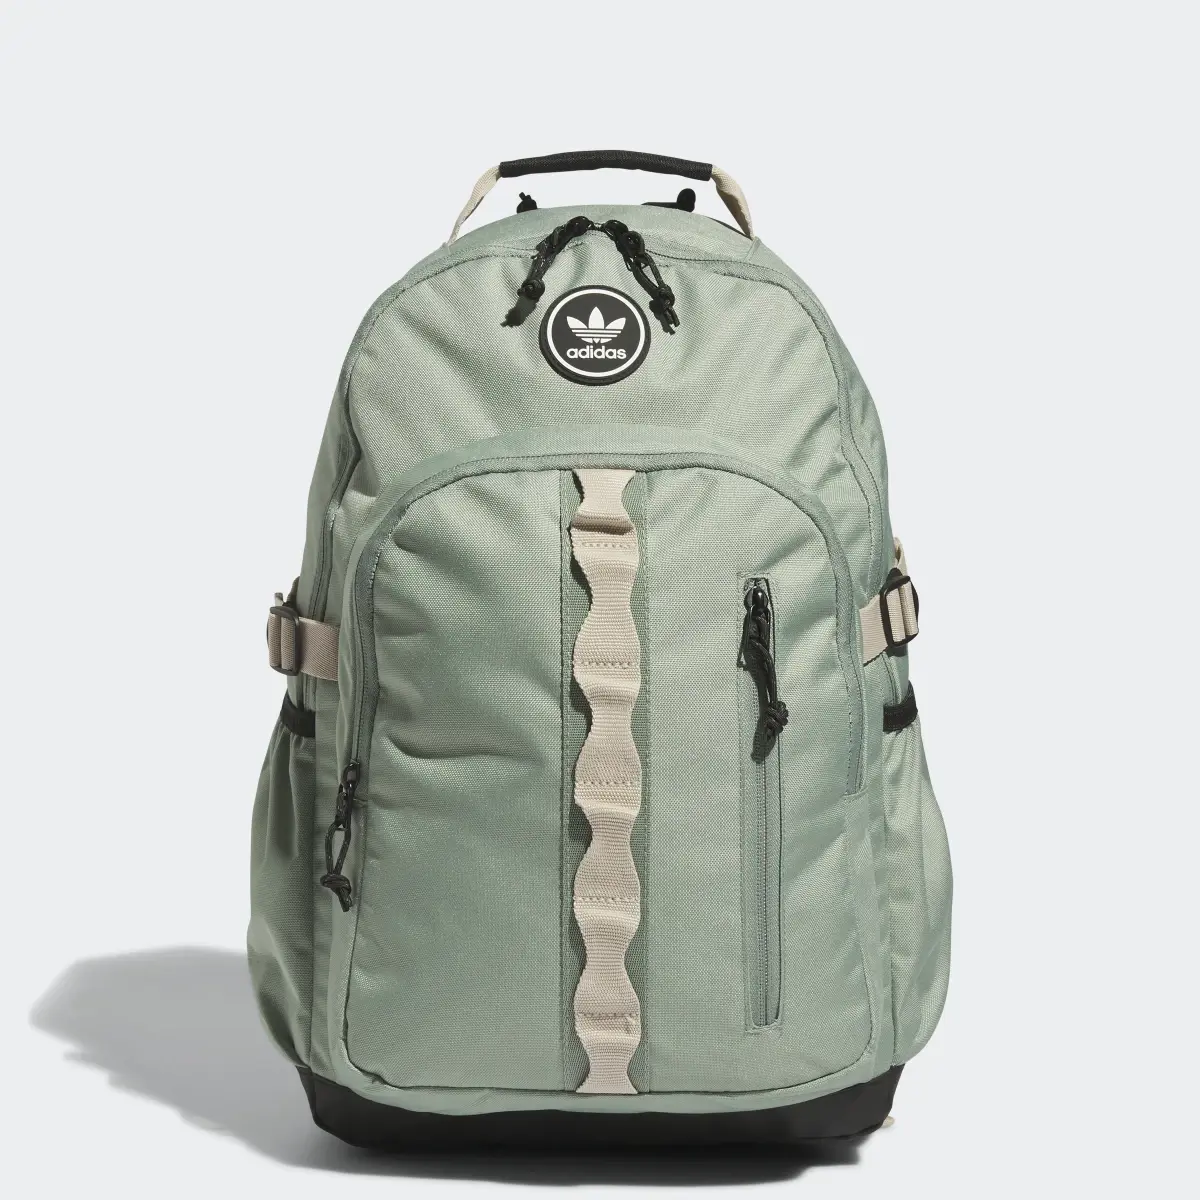 Adidas Originals Trefoil Patch Backpack. 1